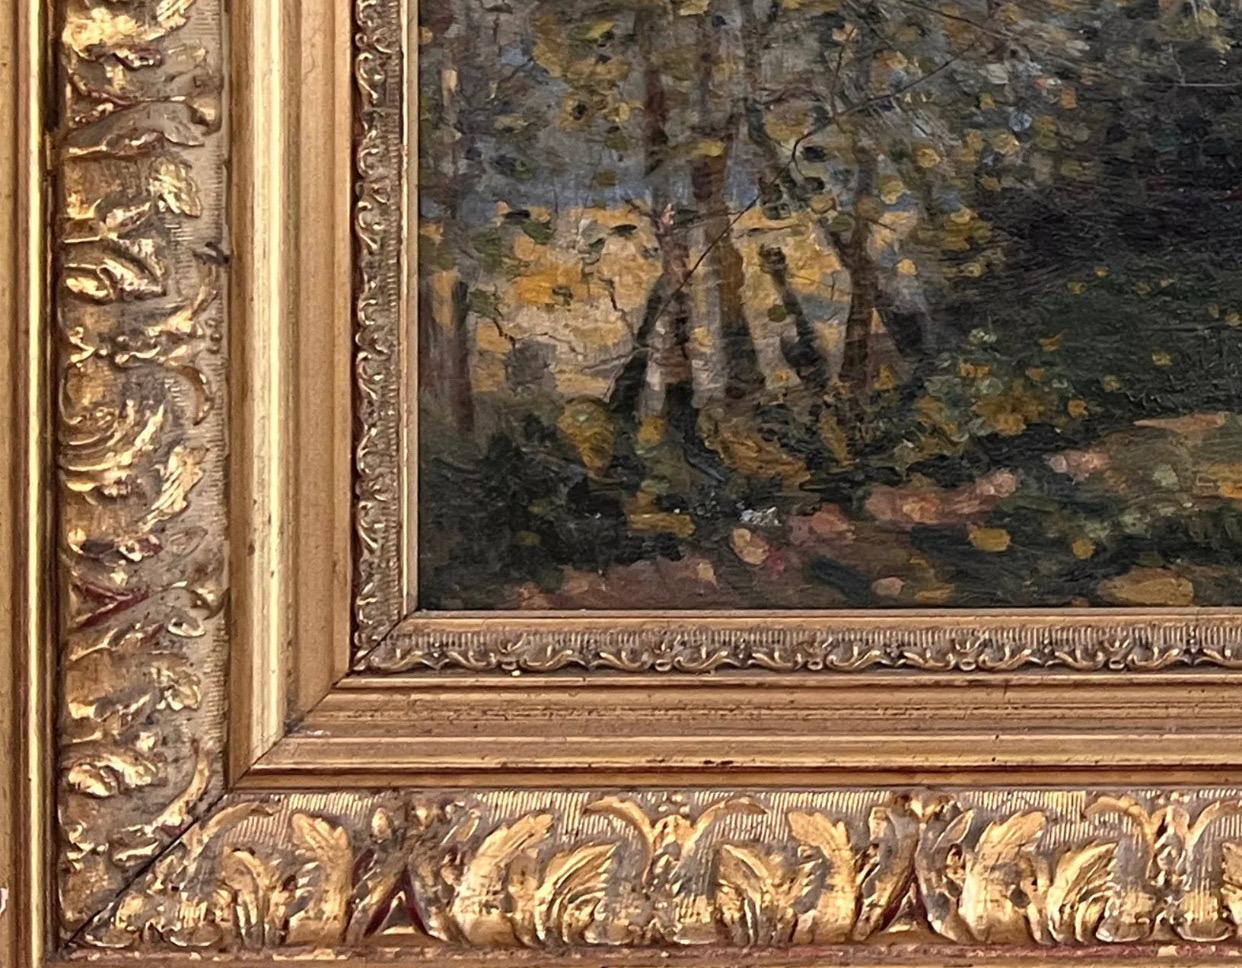 19th C Parisian Impressionist painting dating 1880s in excellent condition measuring 40cm x 32cm 